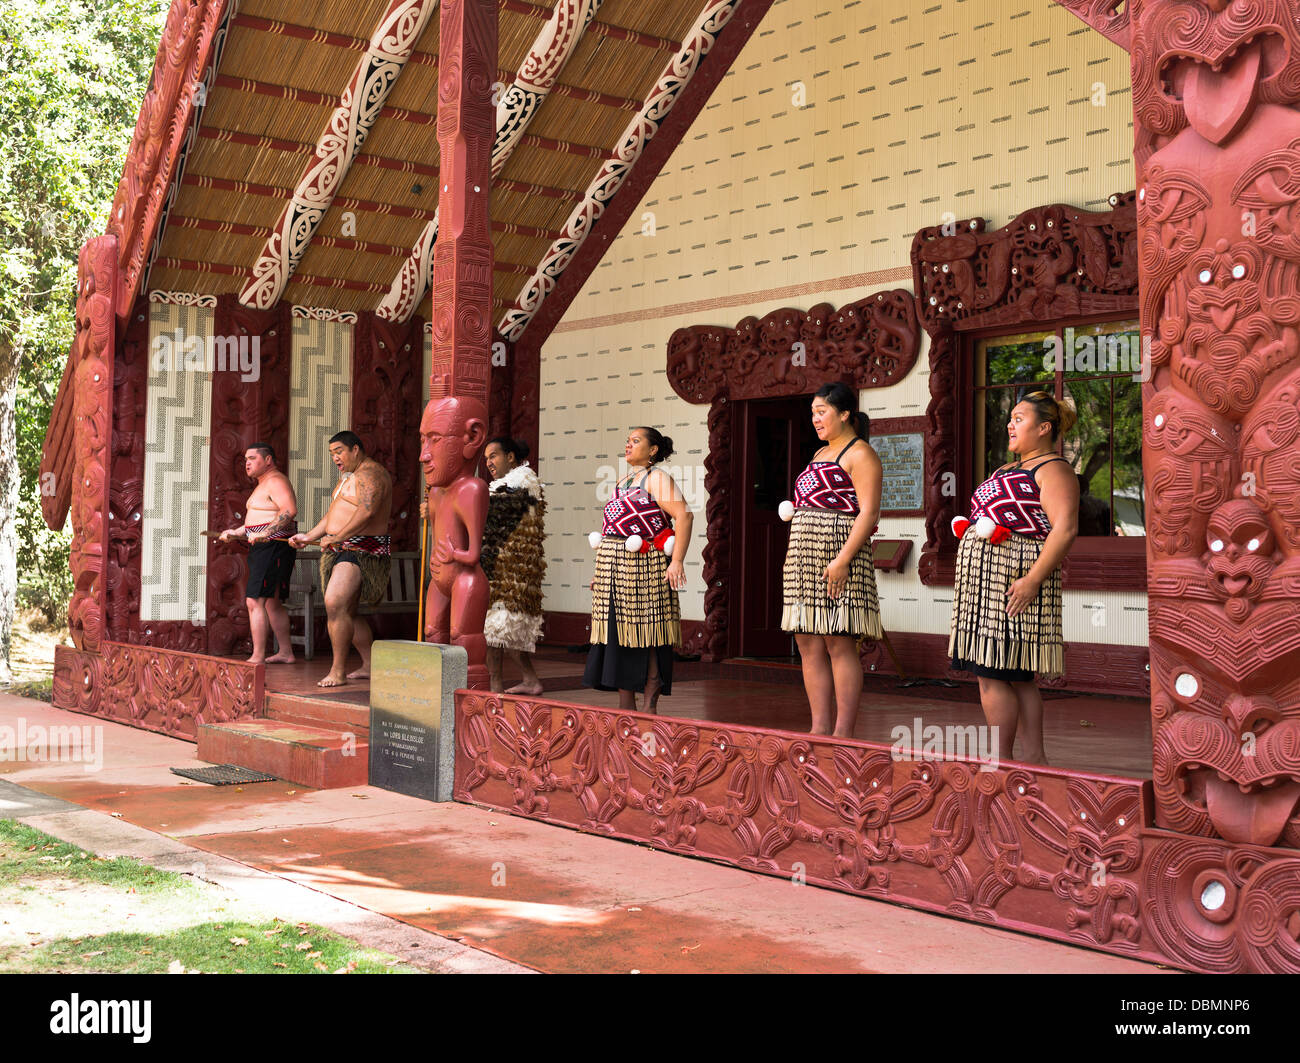 dh Waitangi Vertragsgrund BAY OF ISLANDS NEW ZEALAND Maoris Begrüßung Whare Runanga Maori Treffen Haus Schnitzereien Menschen marae nz Willkommenskultur Stockfoto